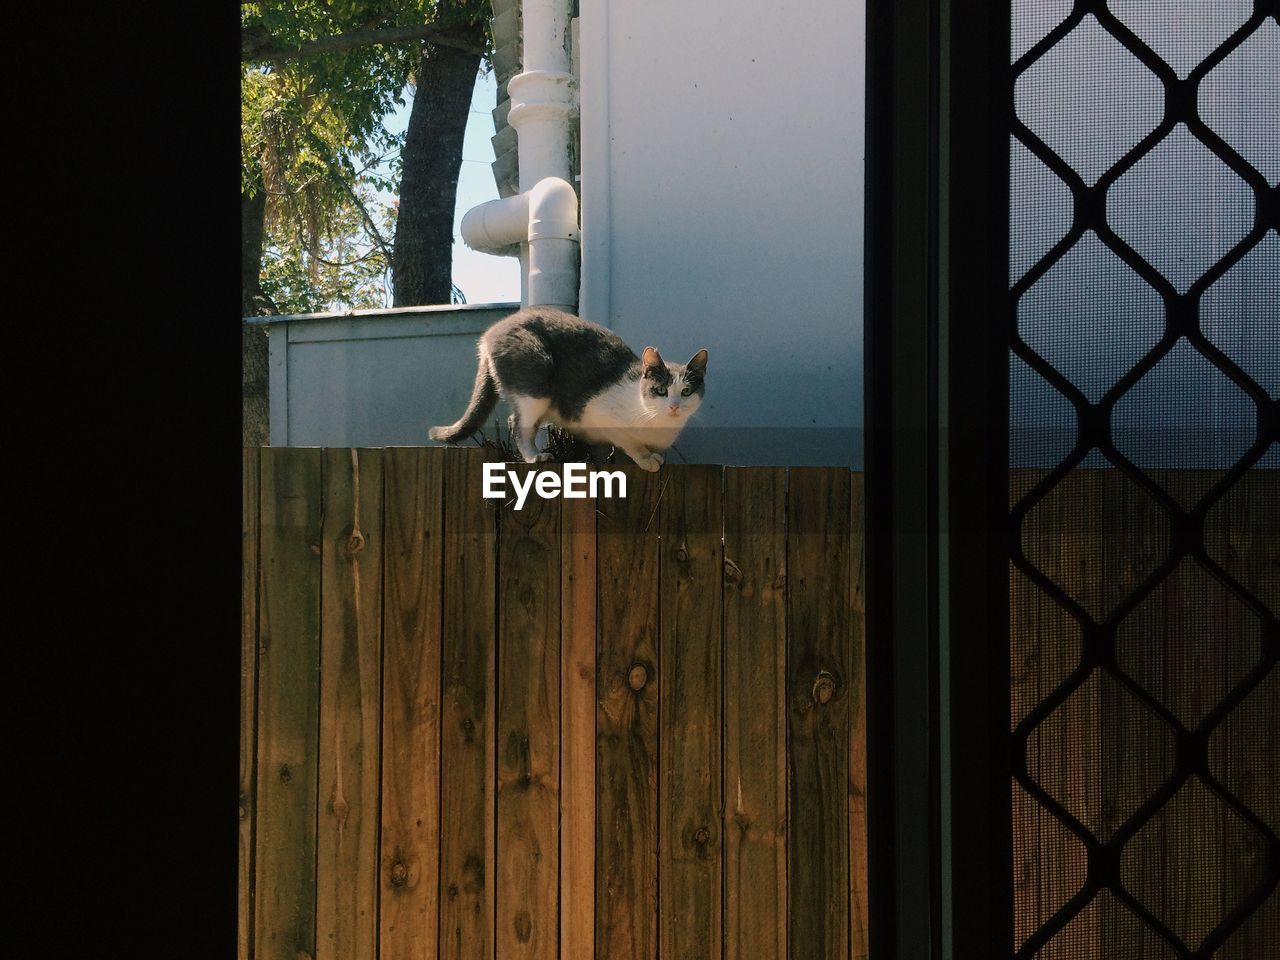 Cat on wooden fence seen through window